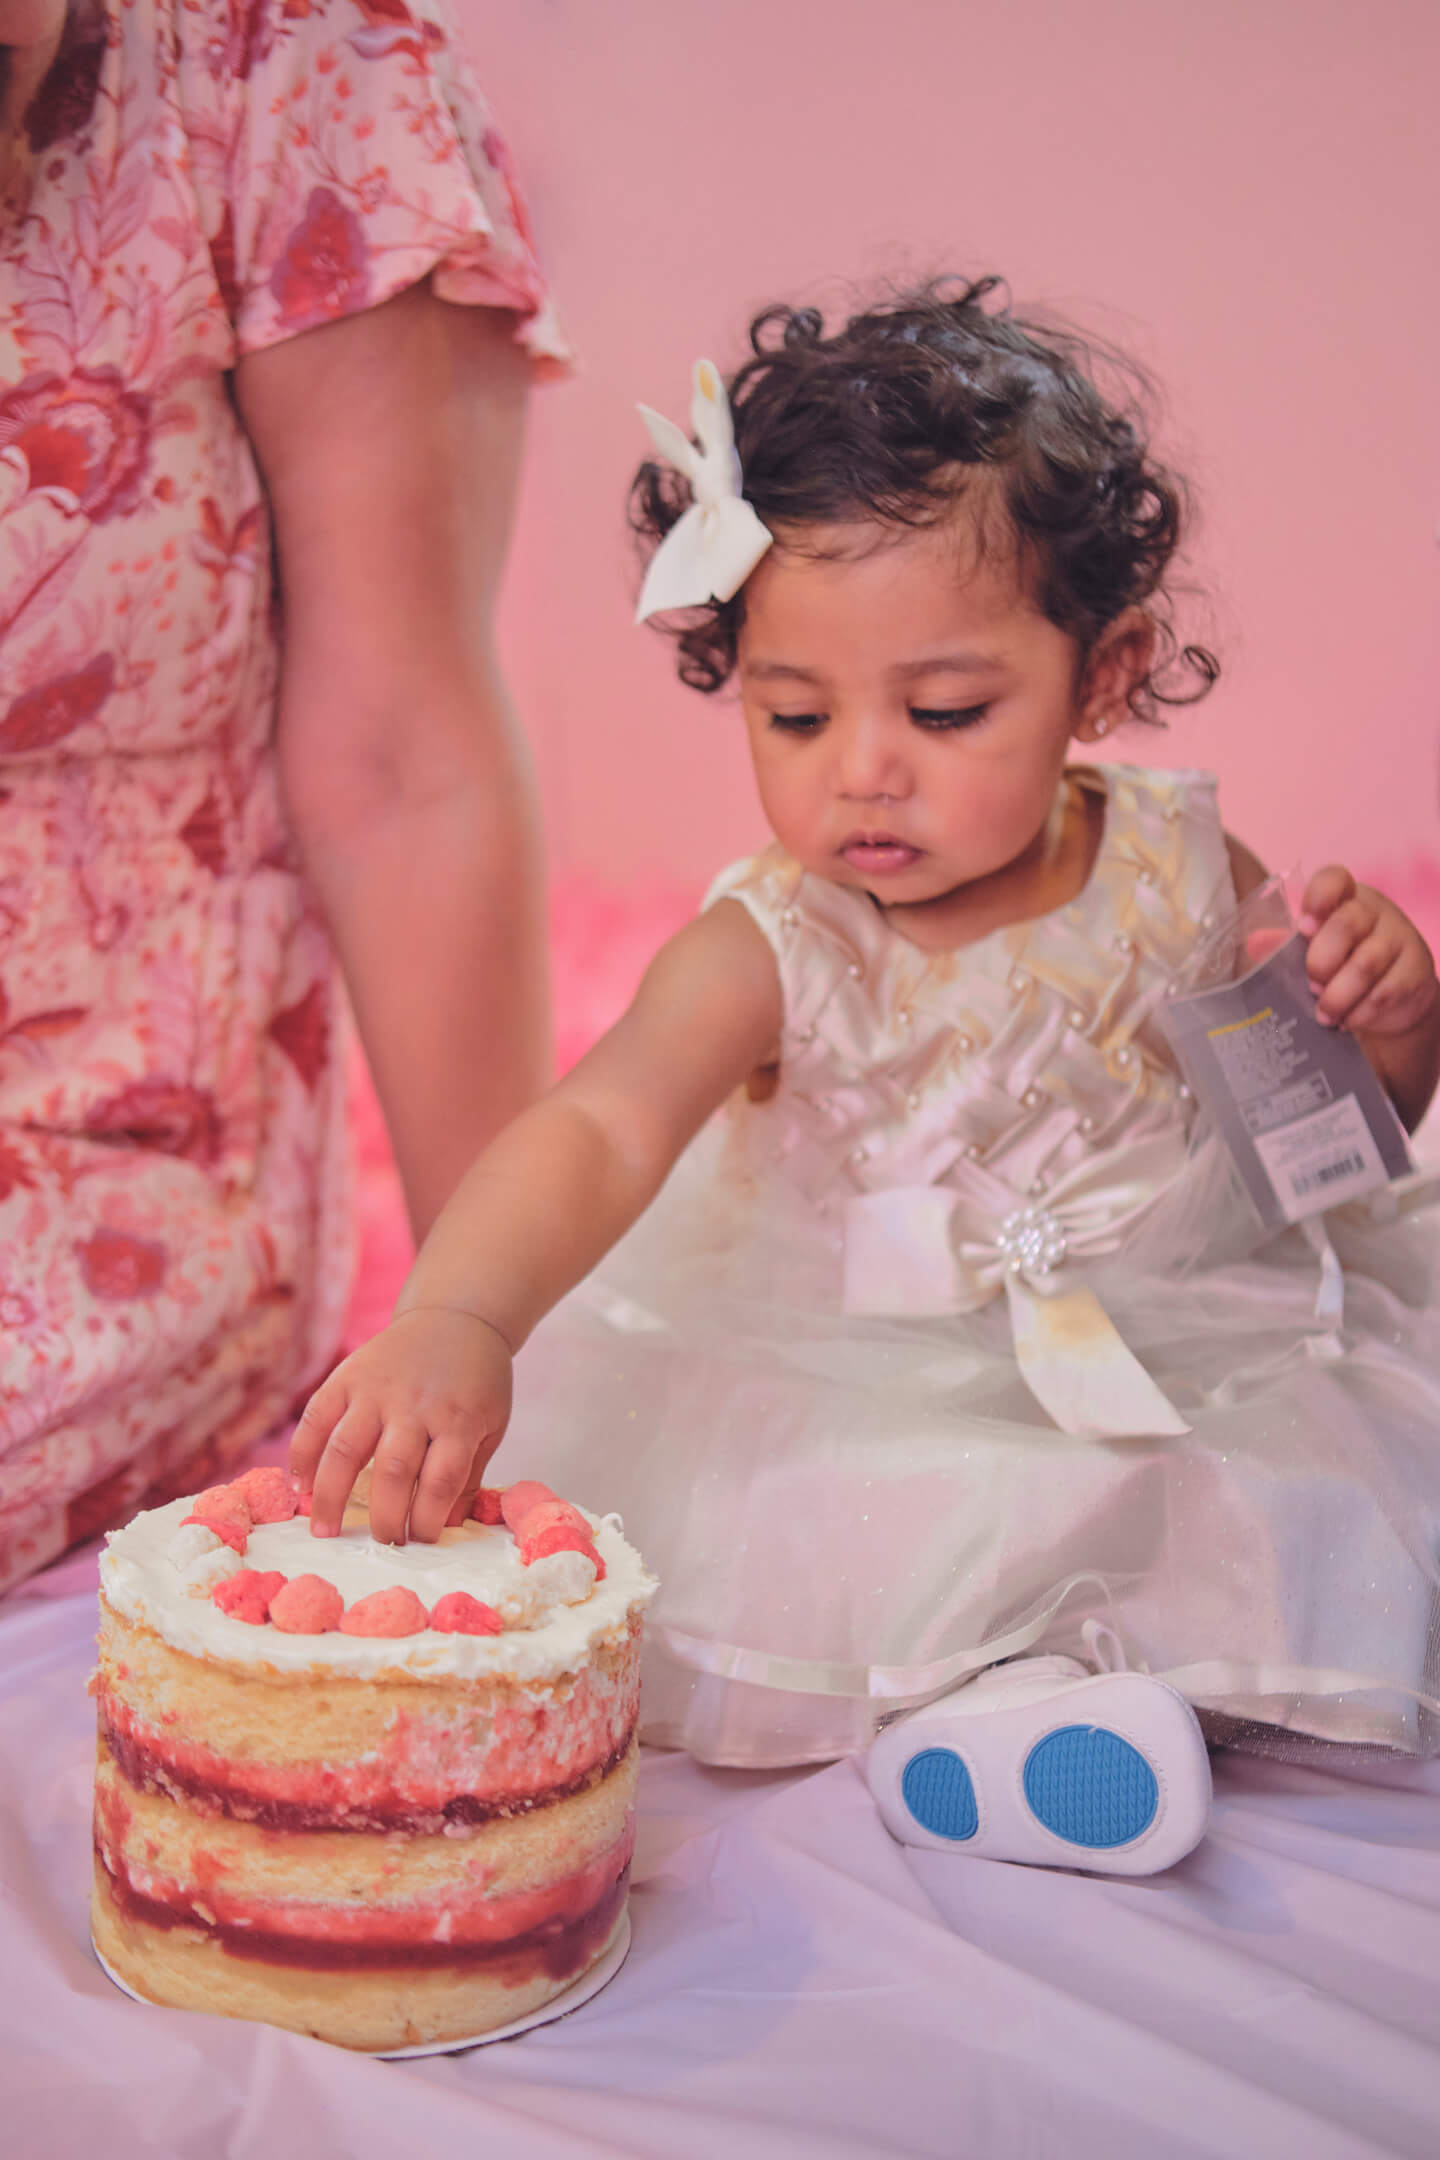 Pooja & Shashi - Layla's 1st Birthday Party - Event Photography - Jersey City, New Jersey 